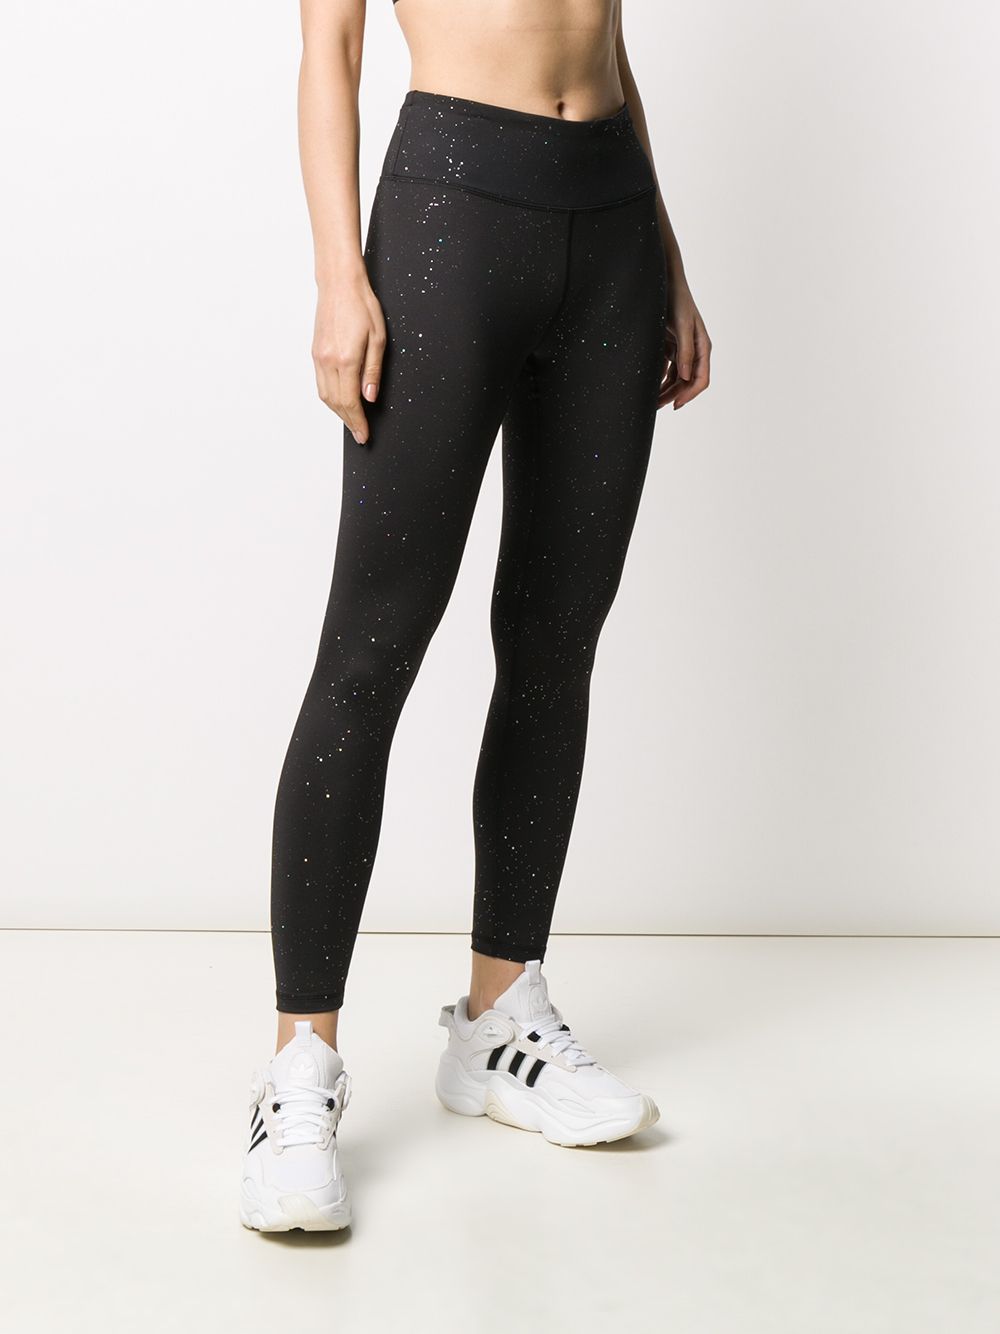 DKNY Women's High Waist Slim Fitness Leggings Black Size X-Small